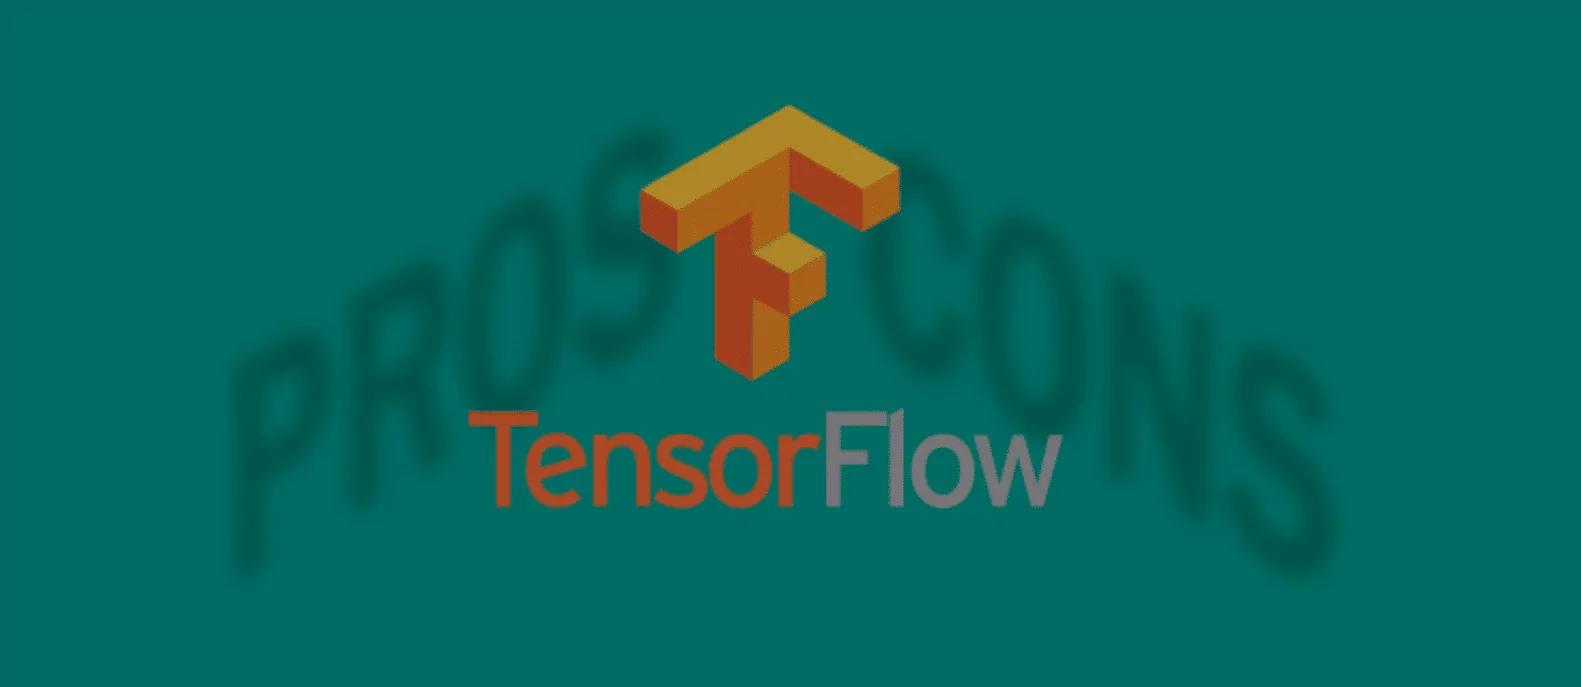 Tensorflow_neurosys_top